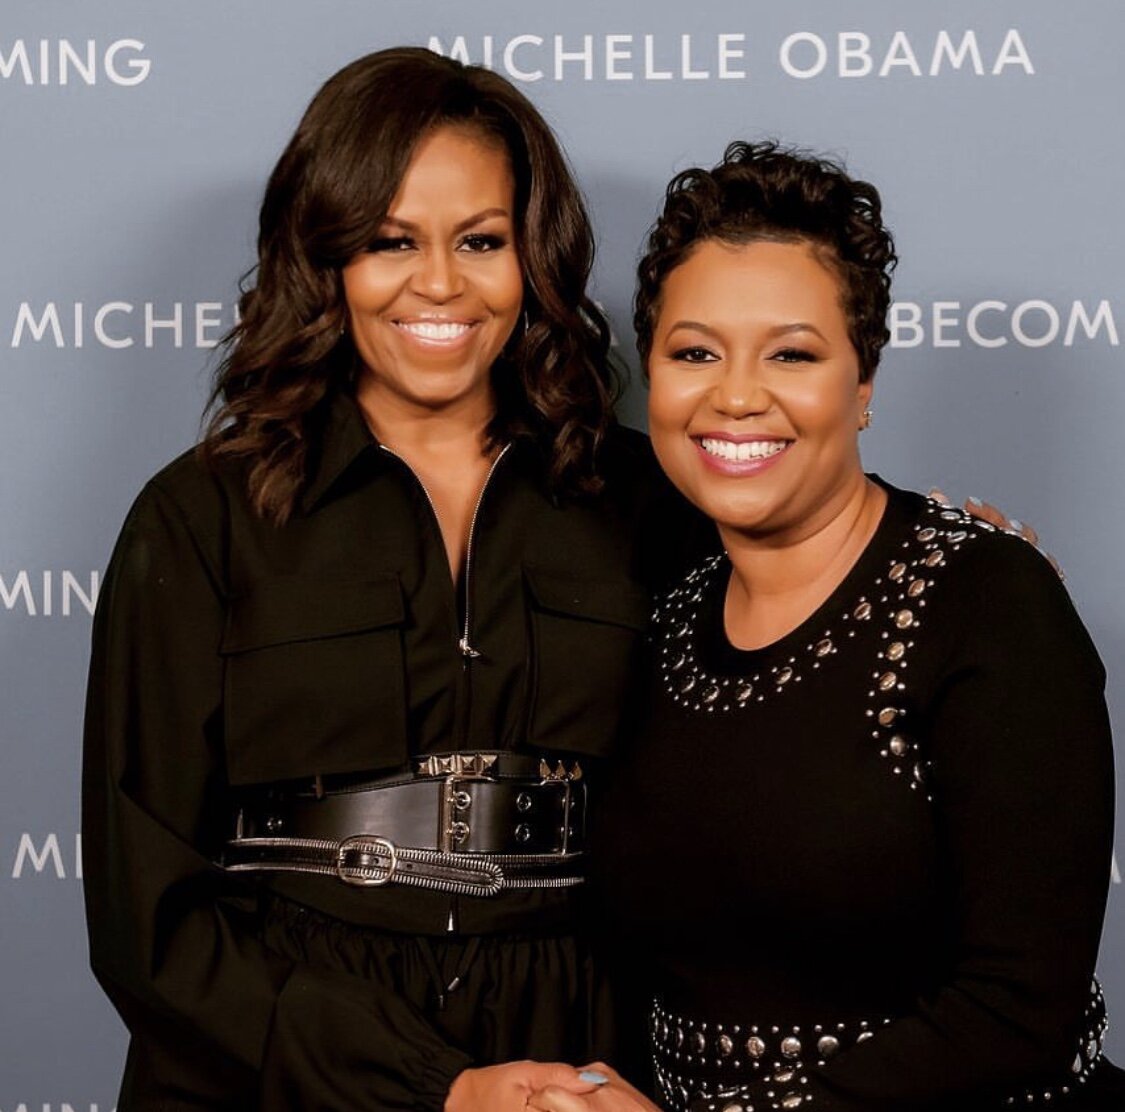  Client Danielle VIP Meet &amp; Greet, Becoming: Michelle Obama book tour 